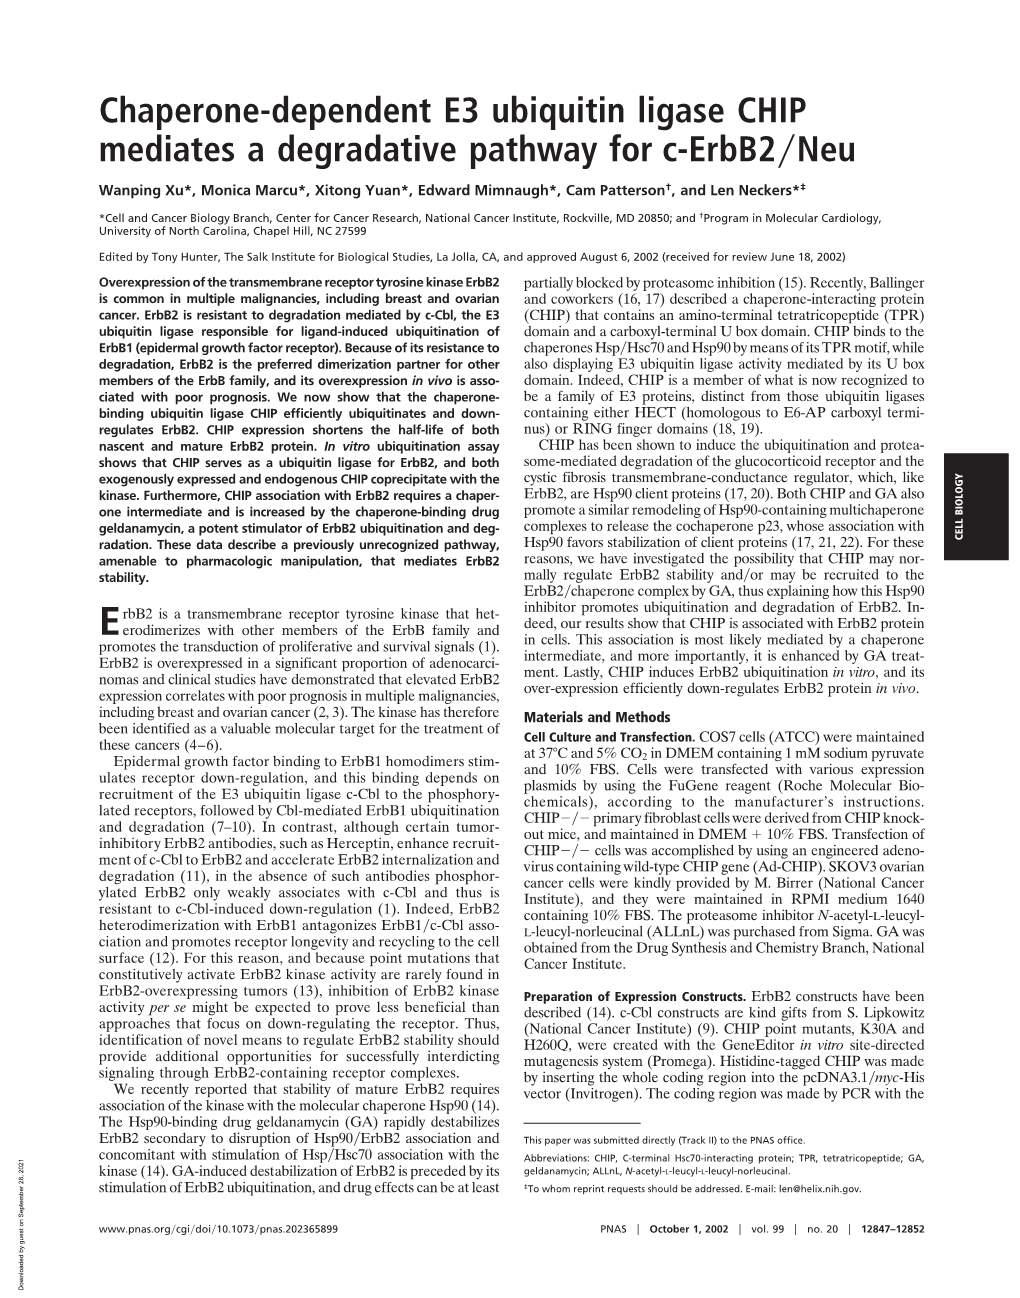 Chaperone-Dependent E3 Ubiquitin Ligase CHIP Mediates a Degradative Pathway for C-Erbb2͞neu